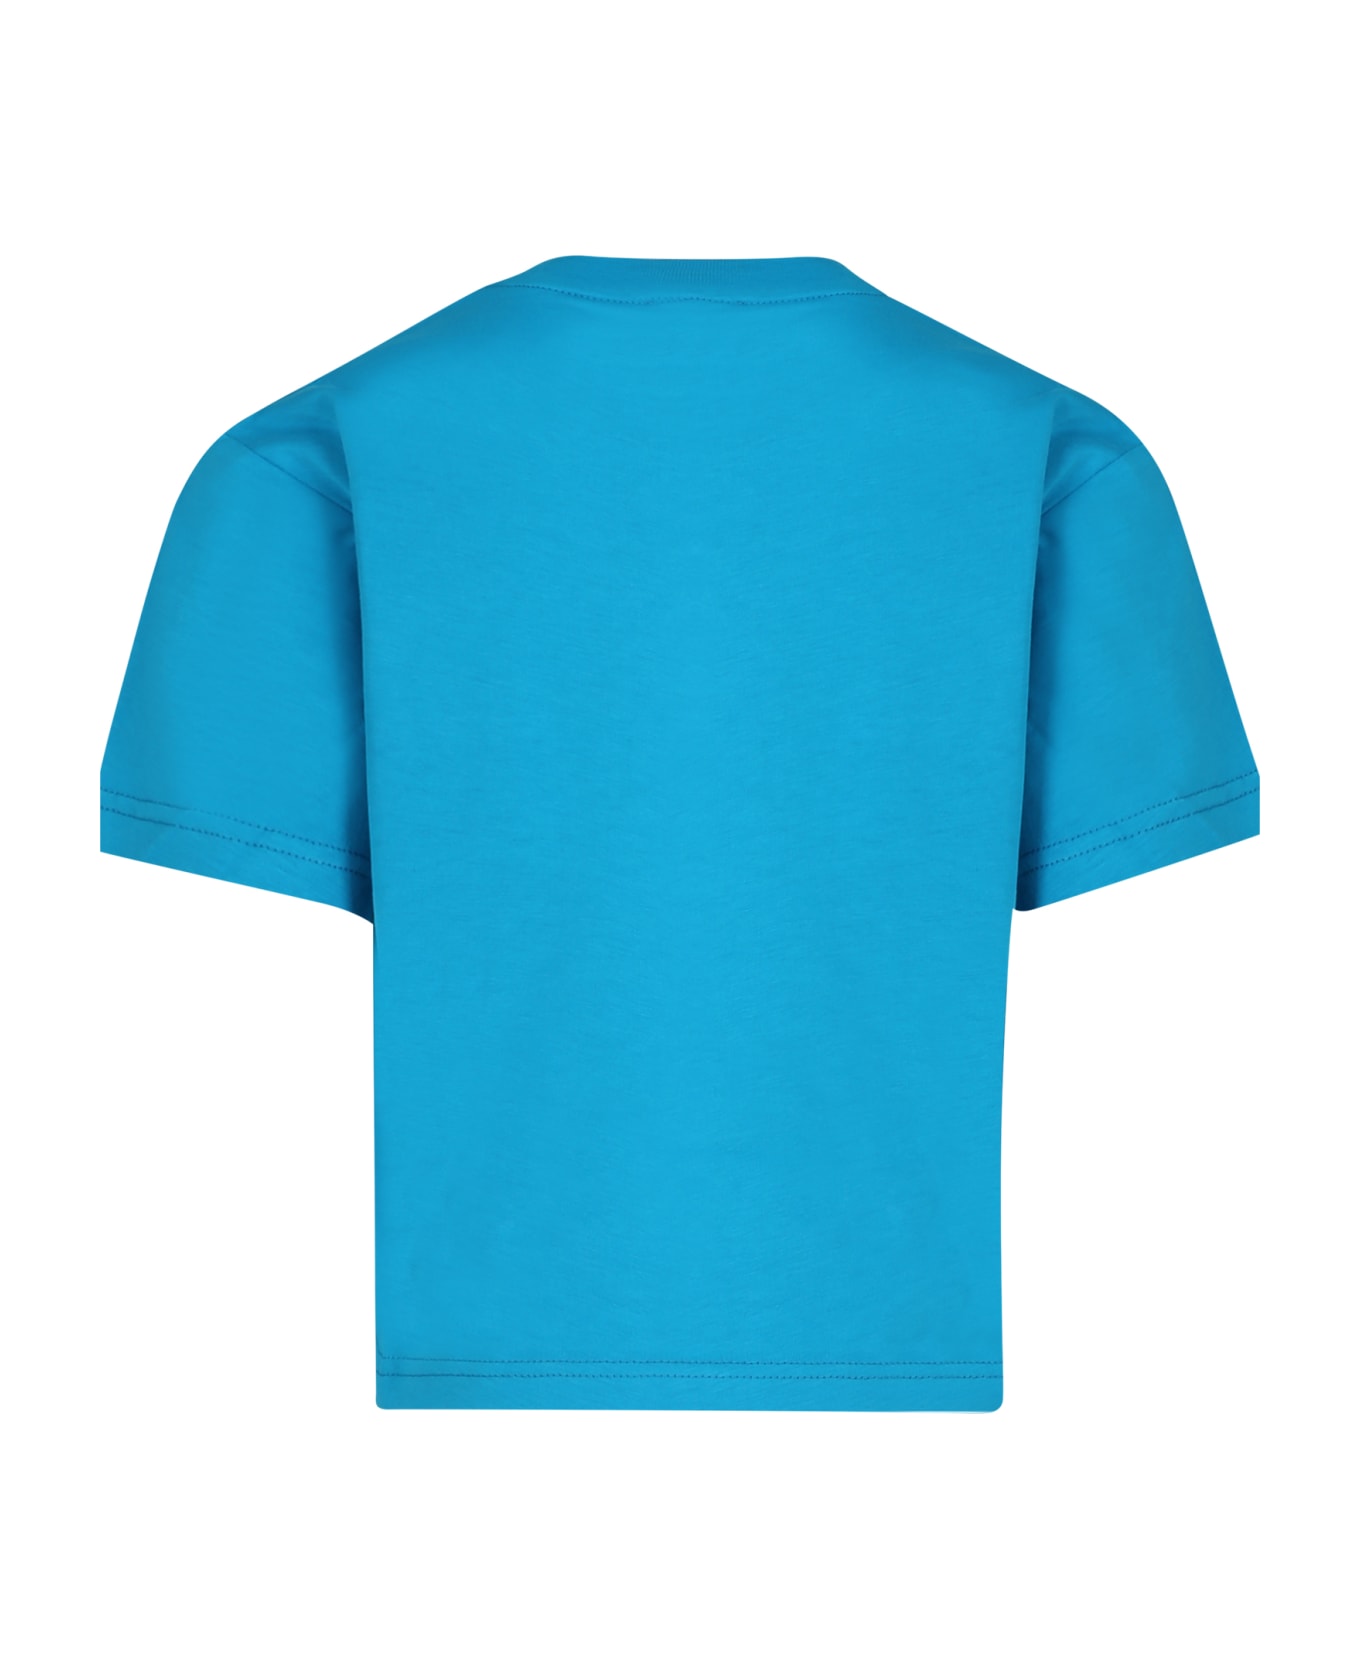 Lanvin Light Blue T-shirt For Boy With Logo - Light Blue